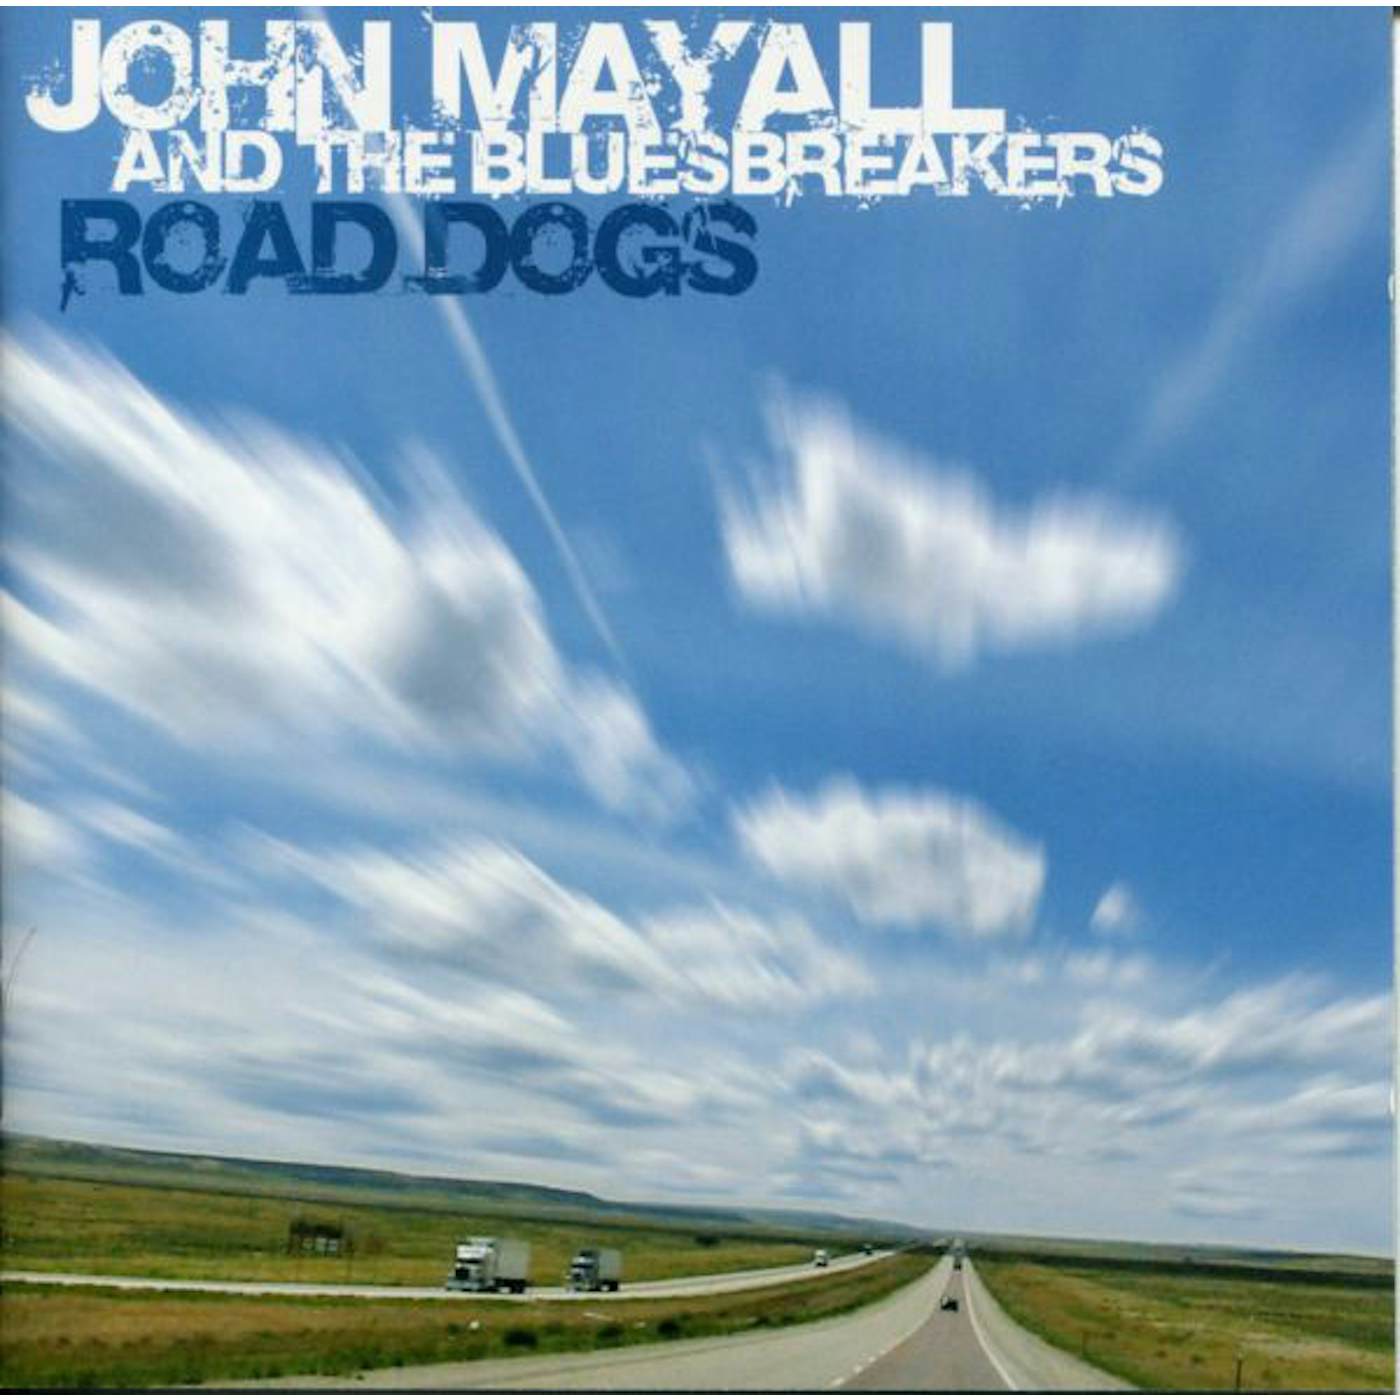 John Mayall & The Bluesbreakers ROAD DOGS (LIMITED/COLOR VINYL/2LP) Vinyl Record